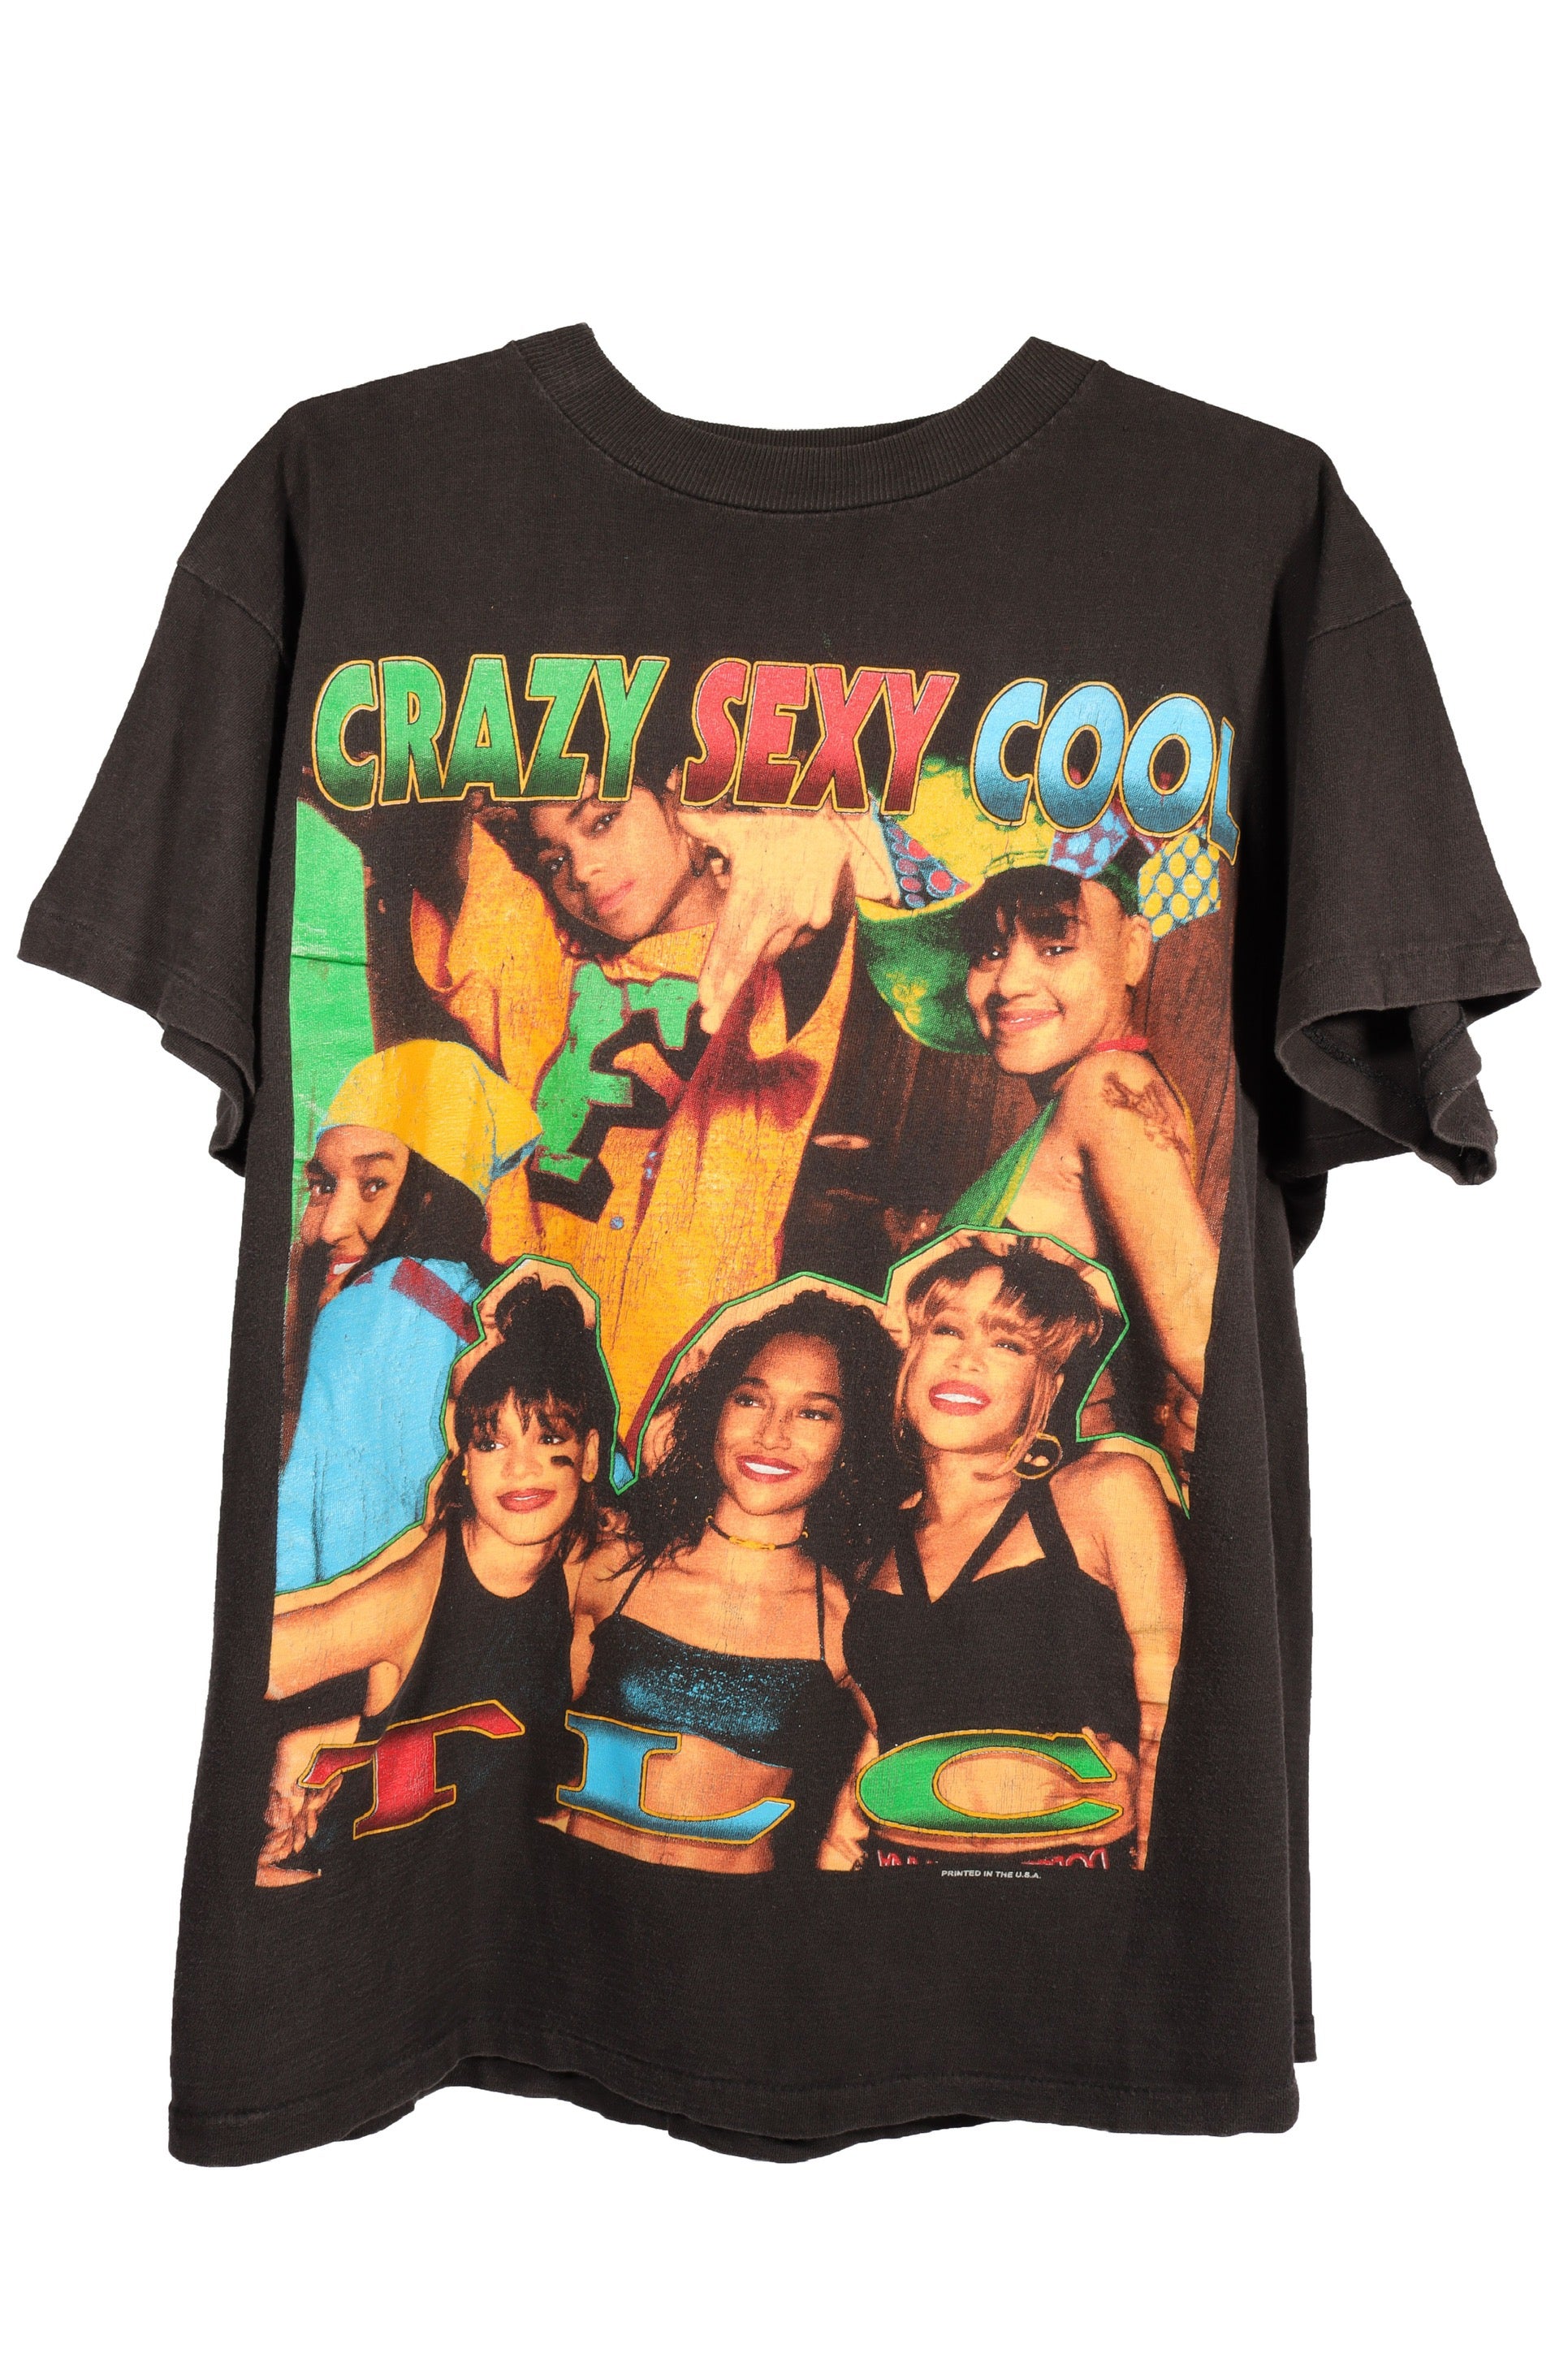 90s USA製 ポカホンタス Disney Nestle Tシャツ e676